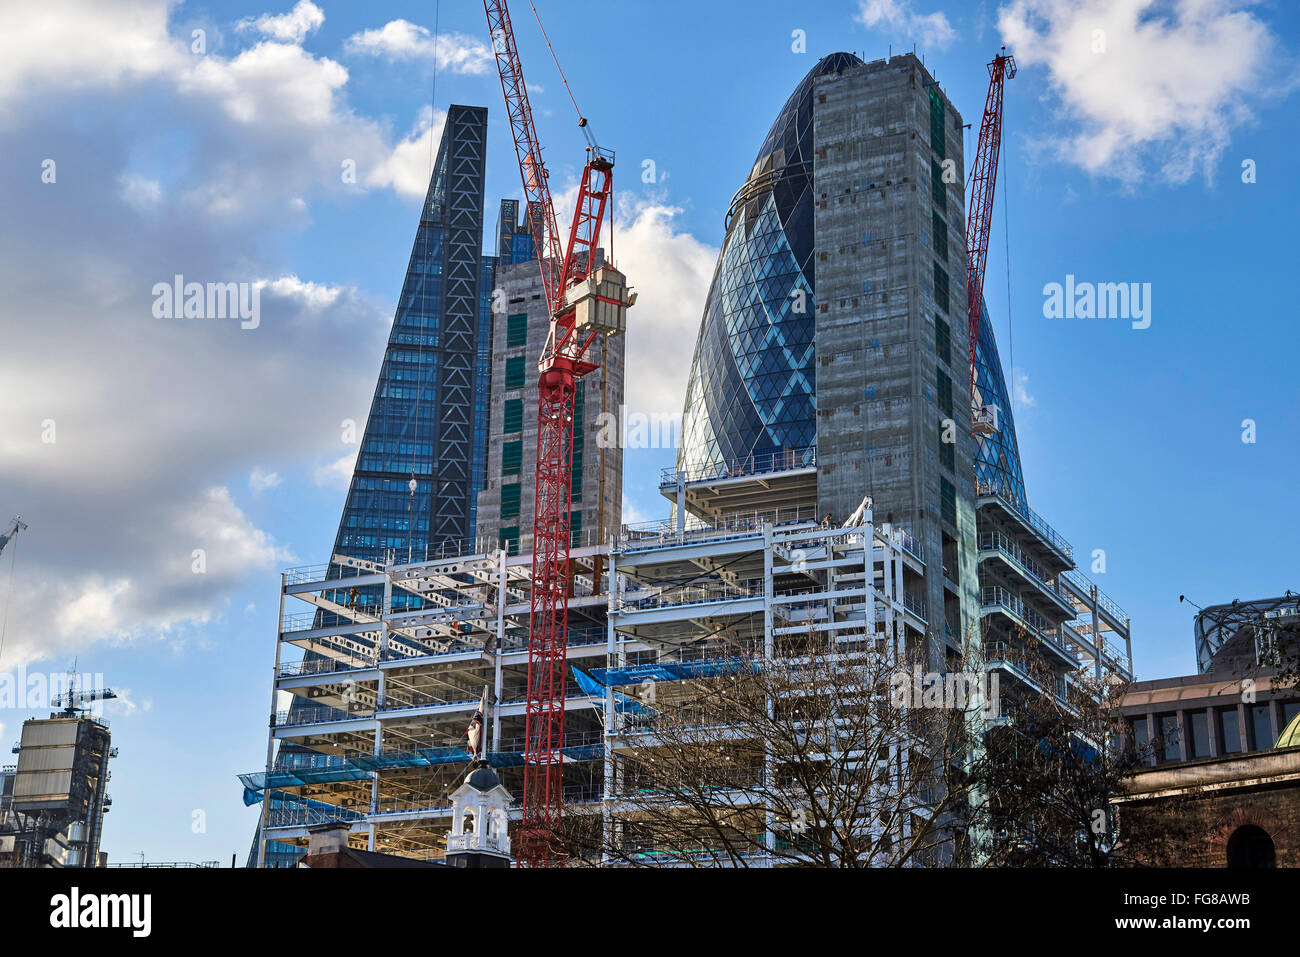 Construction City of London, Aldgate area, London, UK Stock Photo